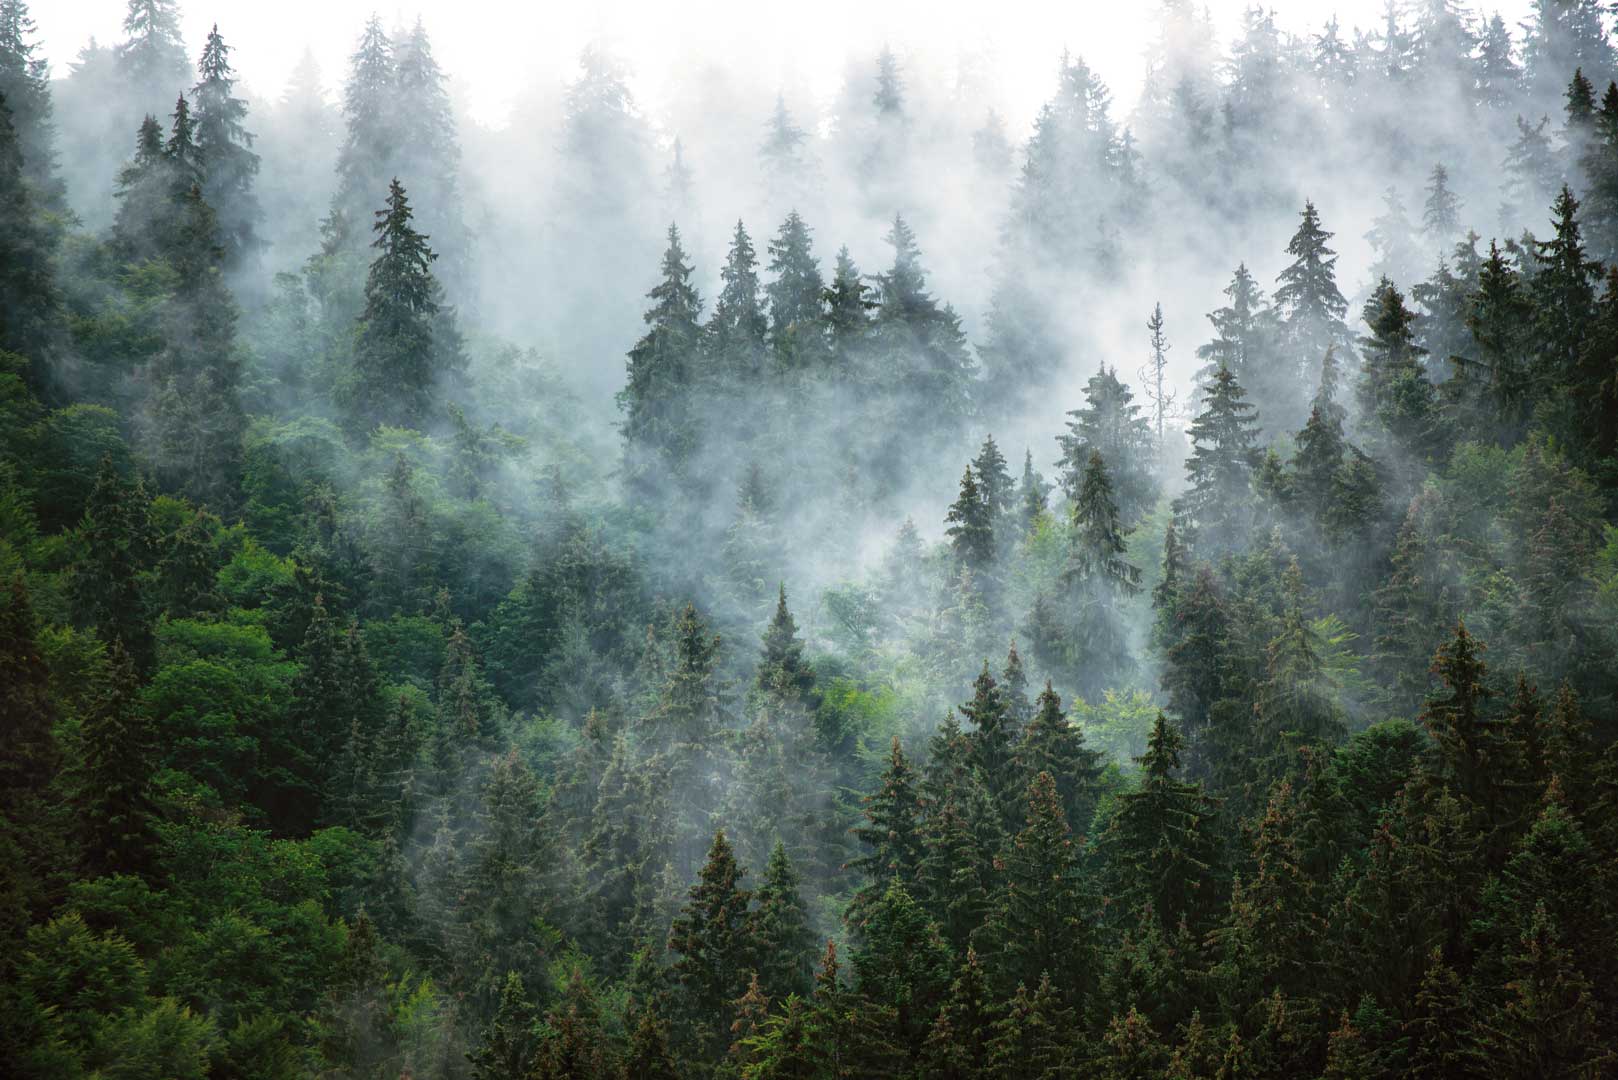 Fototapeta les v mlze: zelený jehličnatý les, mlha